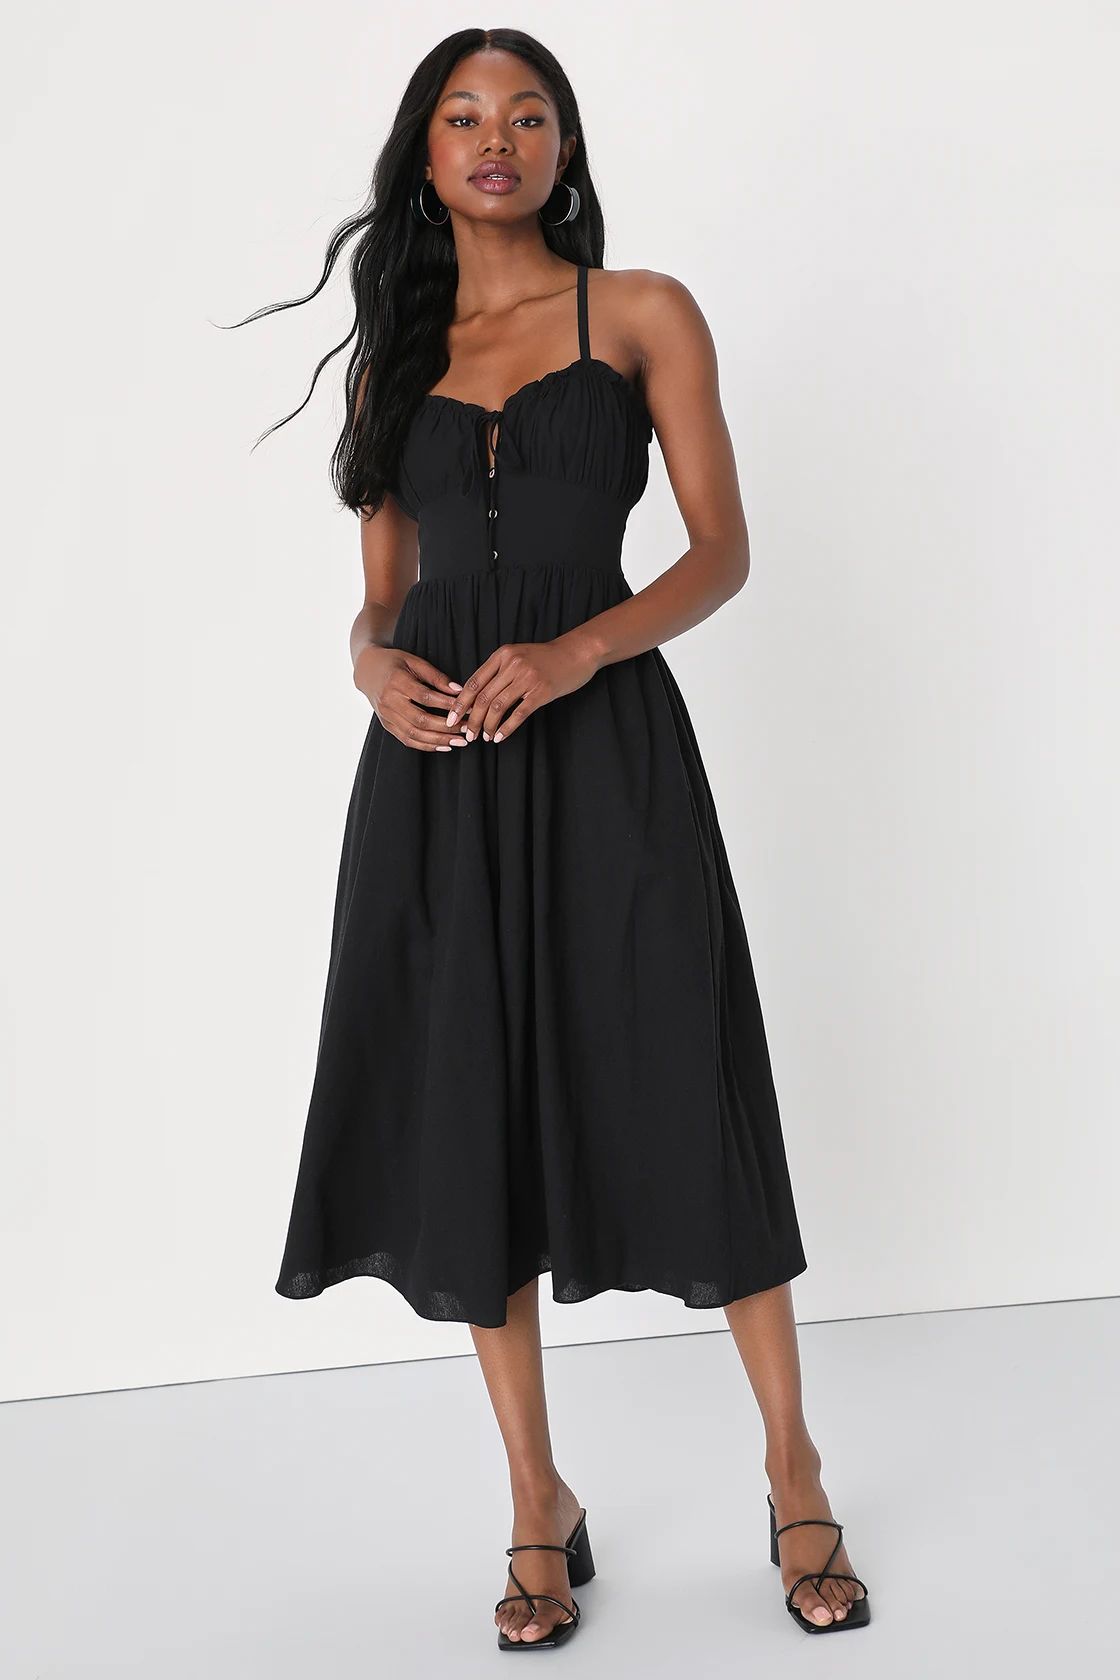 Portofino Perfection Black Lace-Up Backless Midi Dress | Lulus (US)